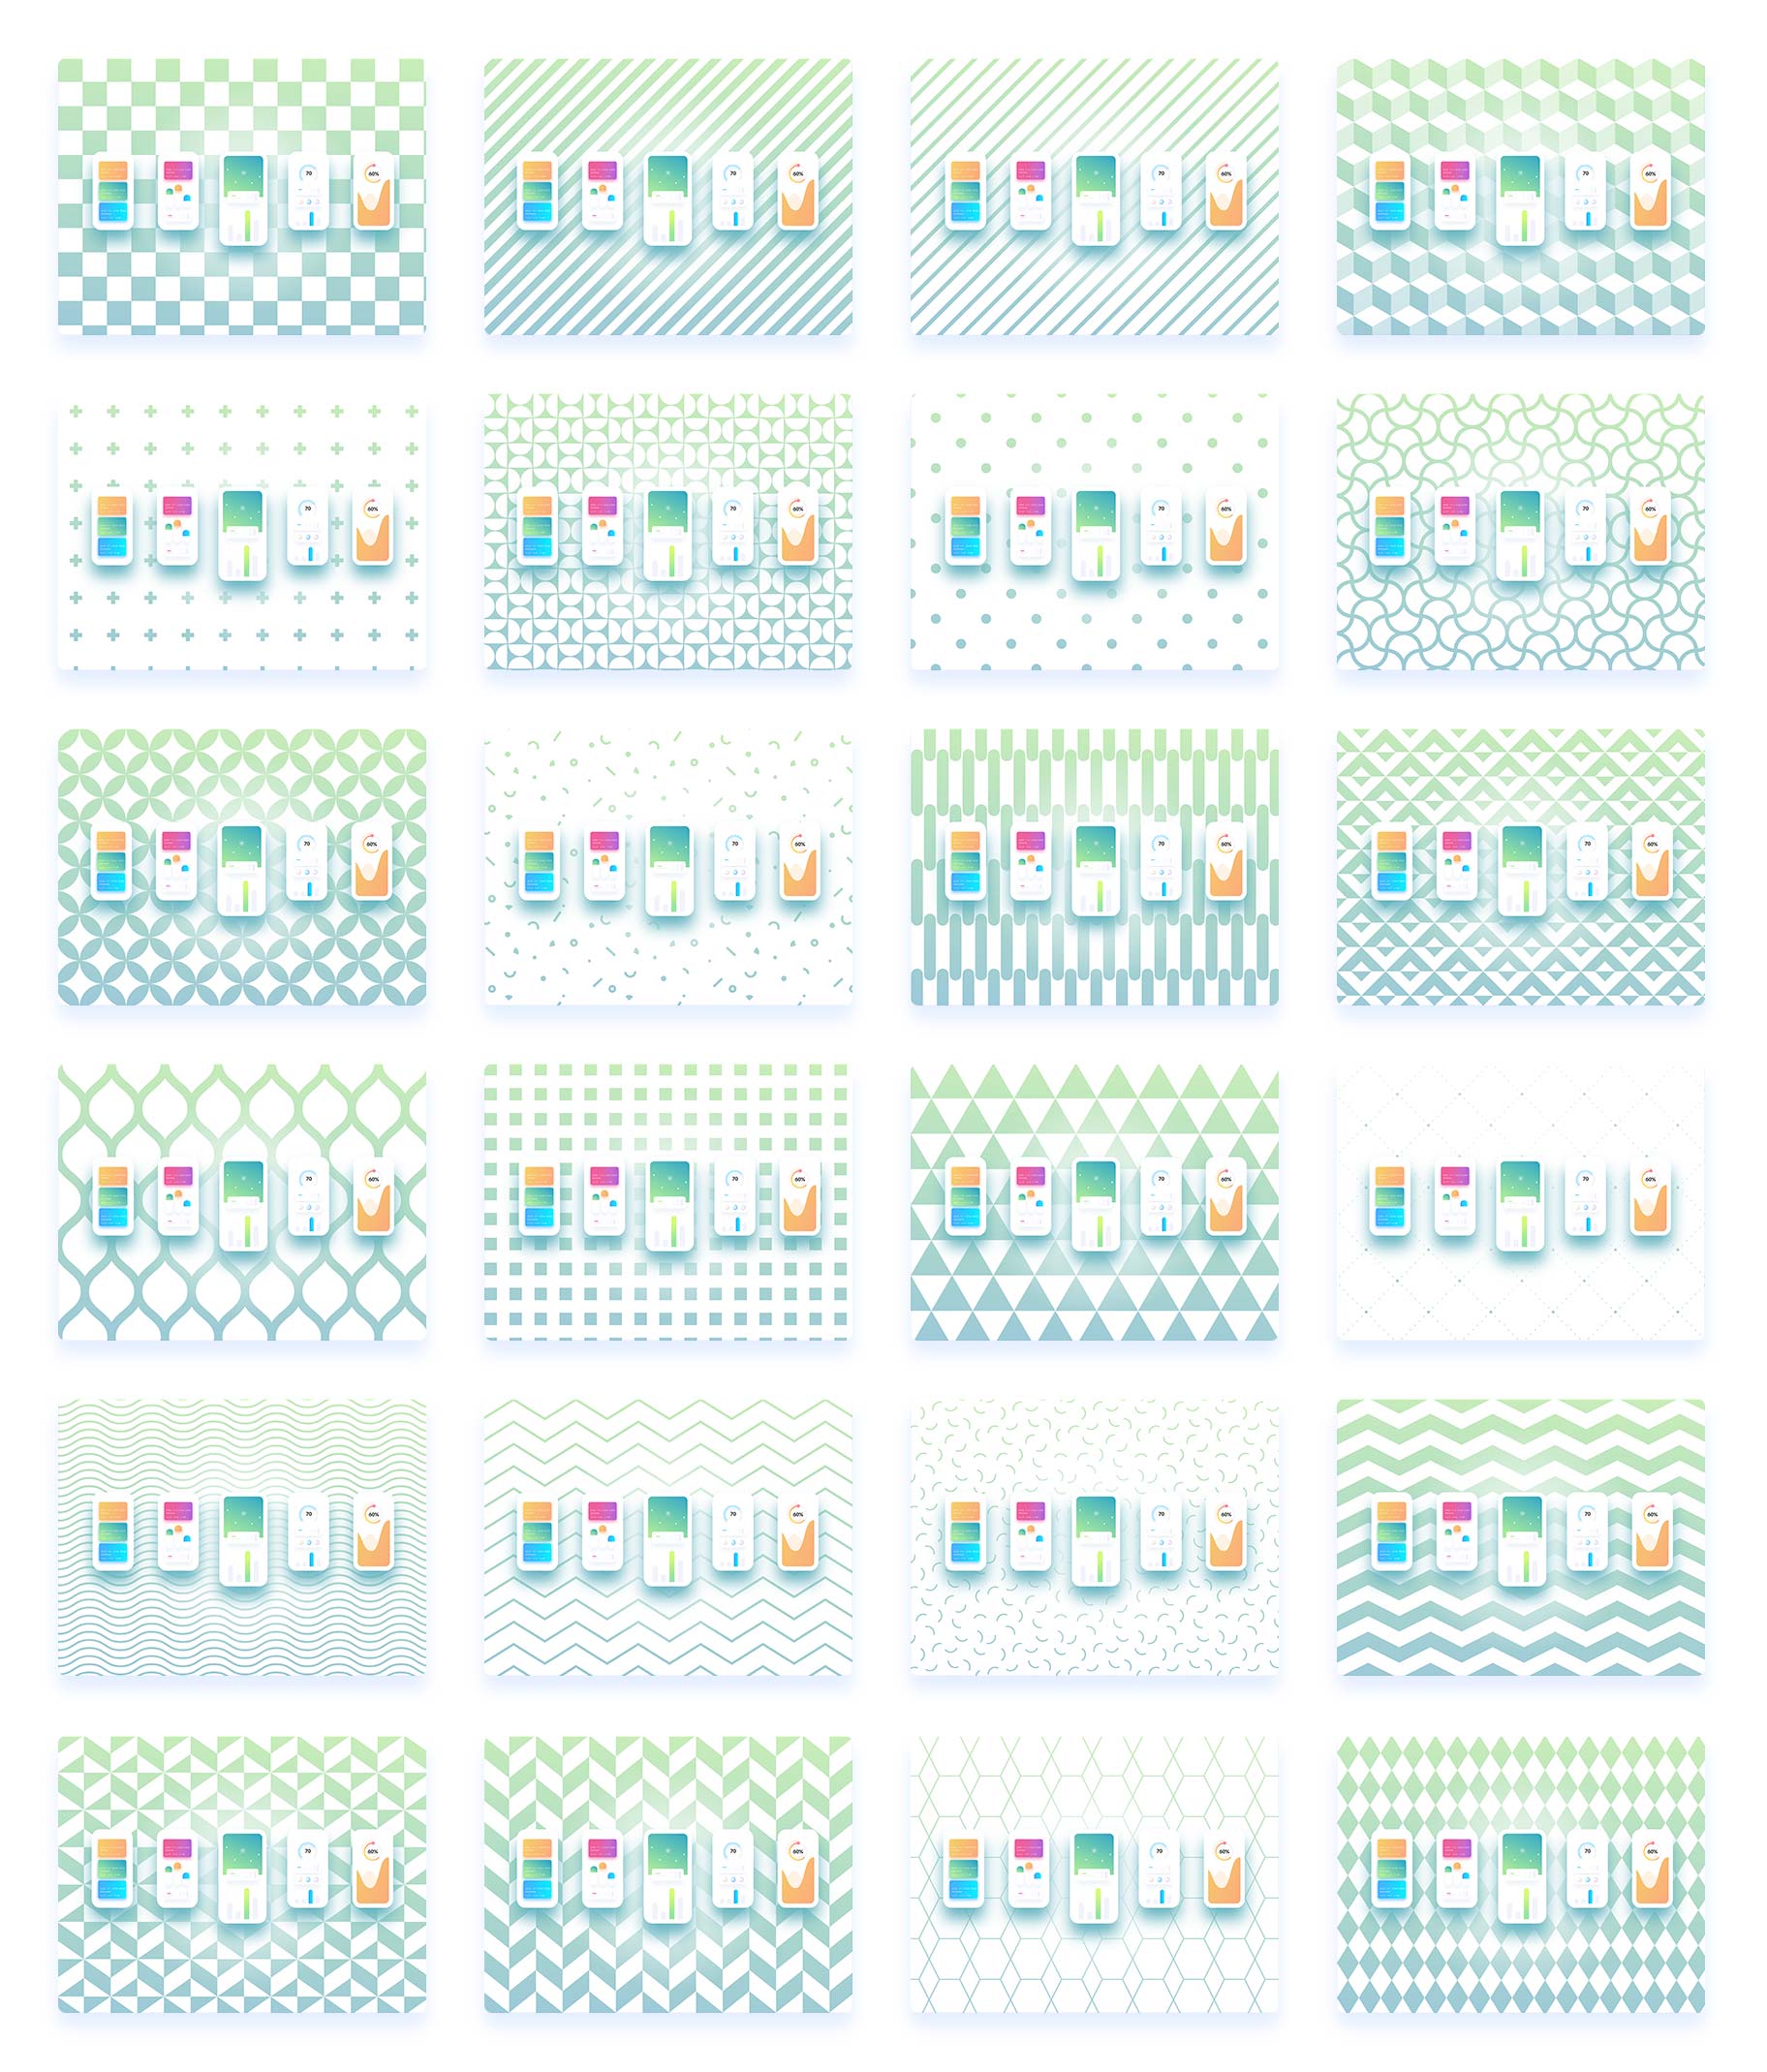 grid patterns